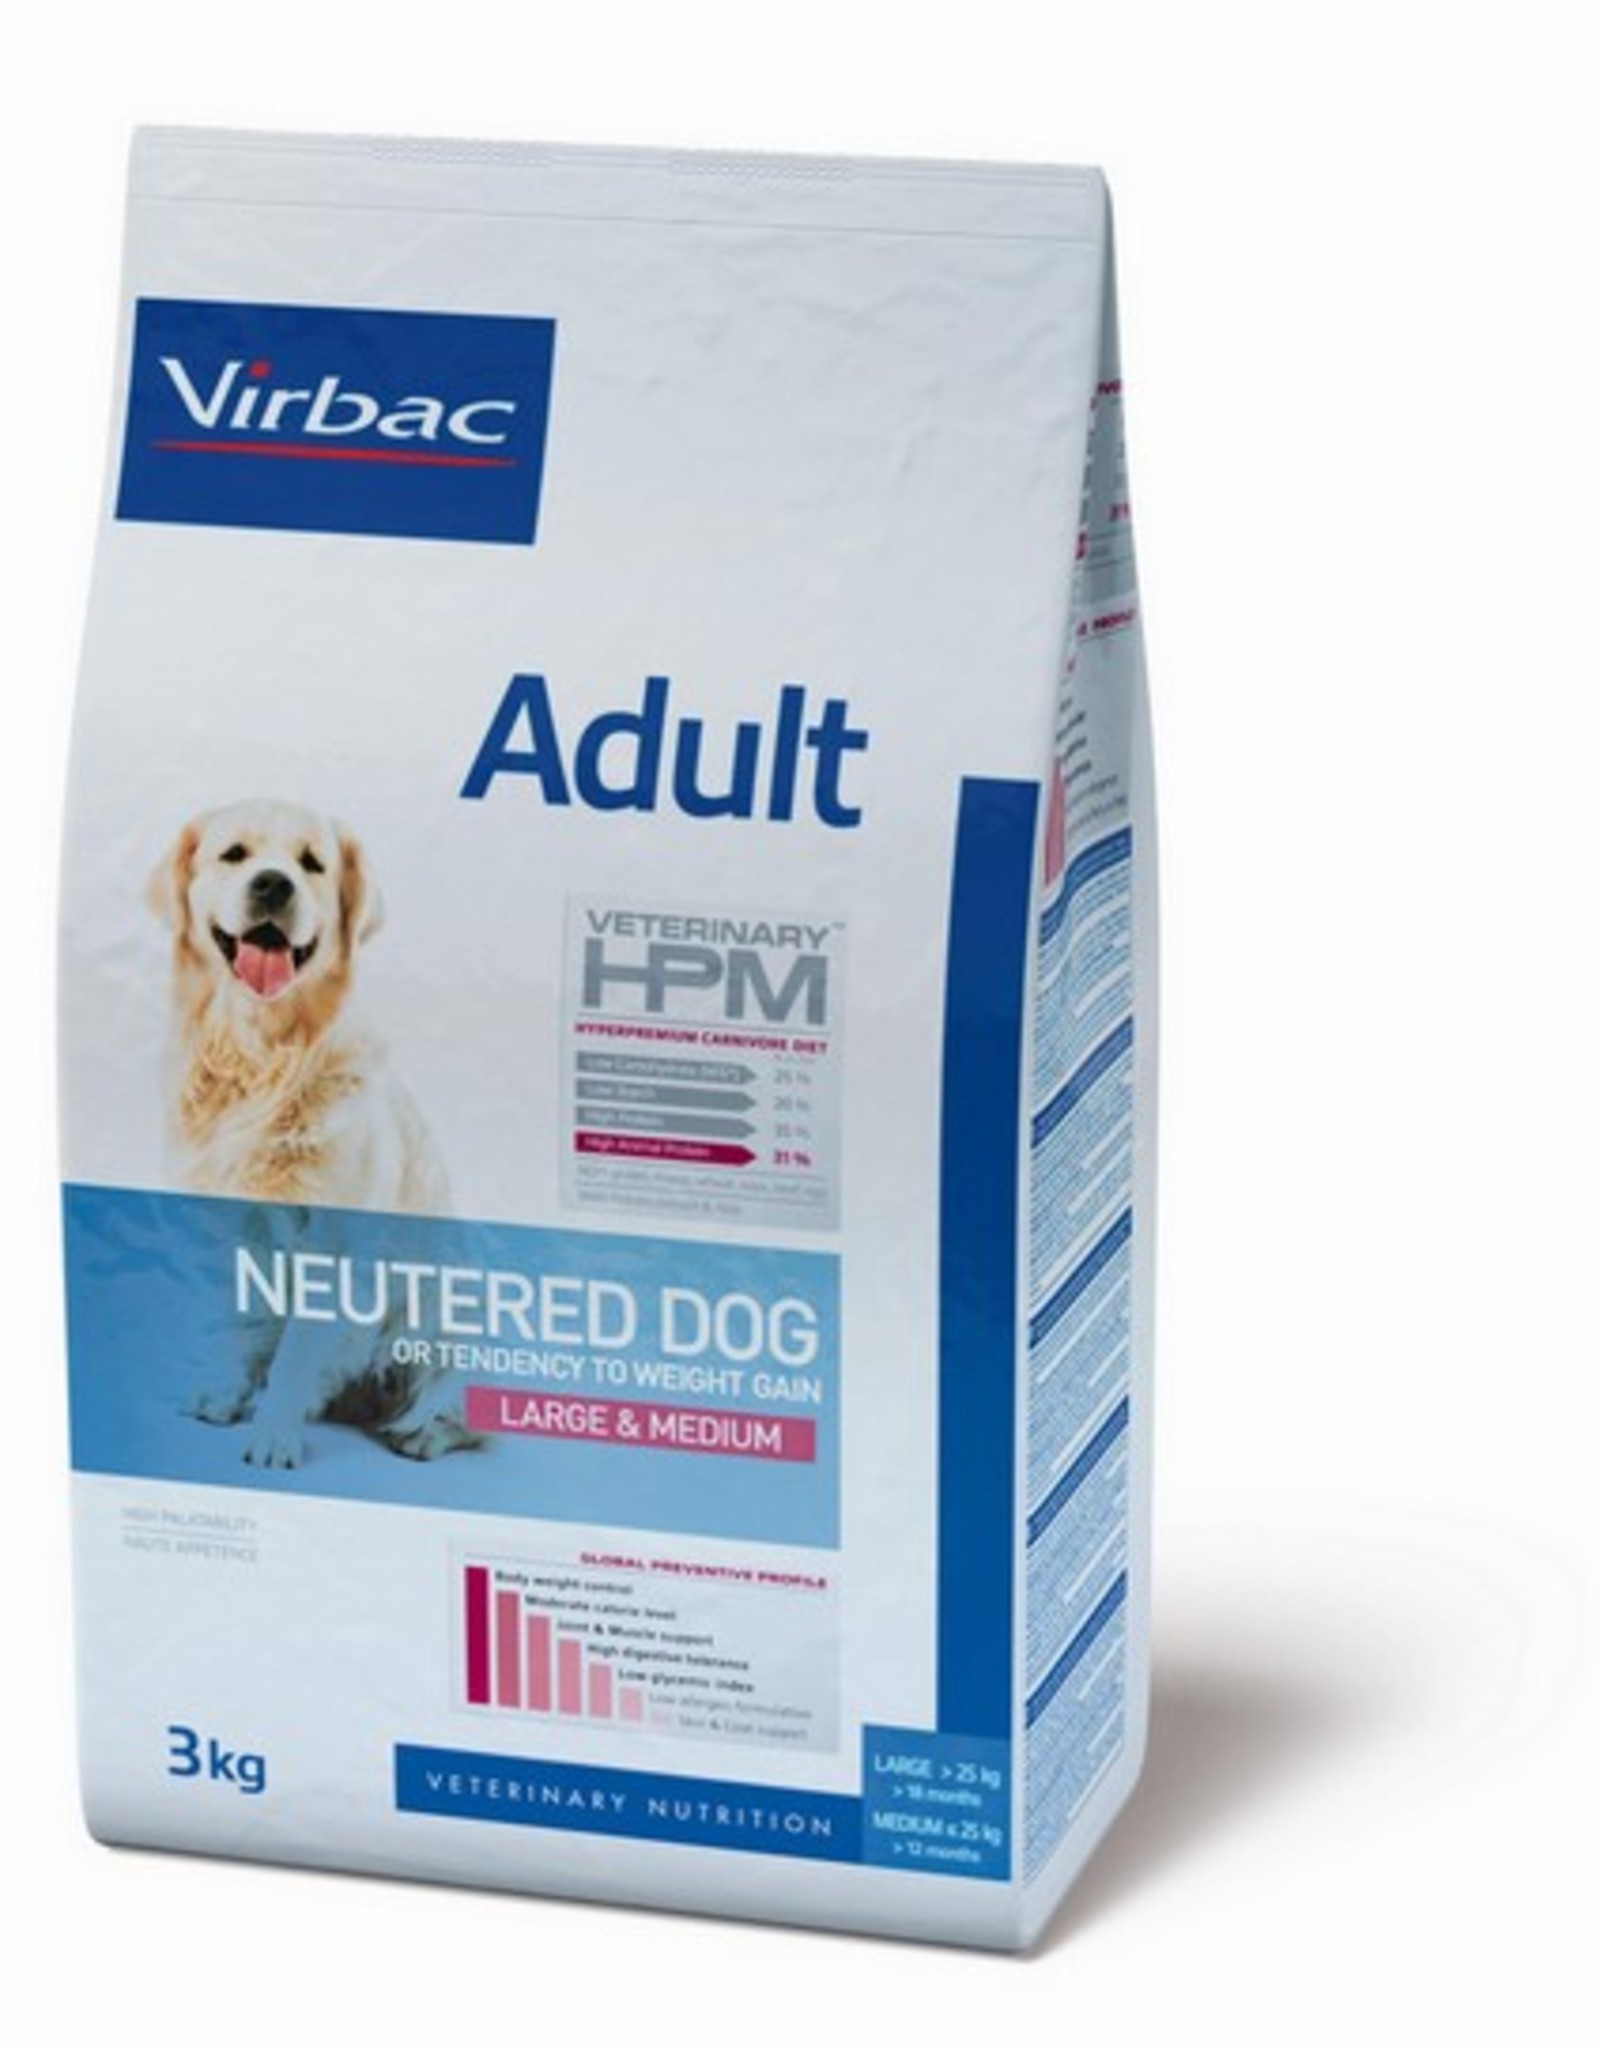 Virbac Virbac Hpm Dog Neutered Adult Large/medium Breed 3kg